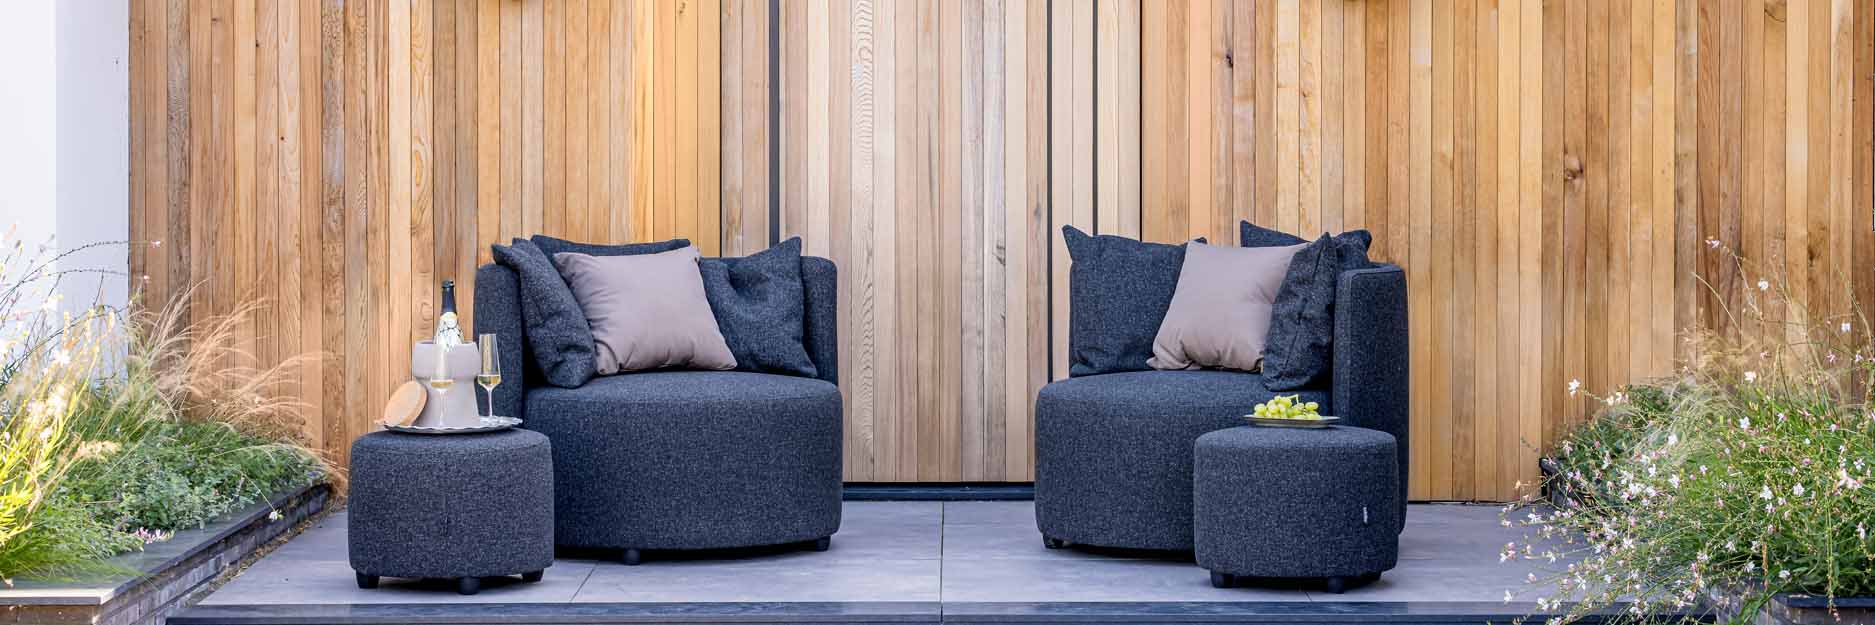 outdoor furniture allweather sofa